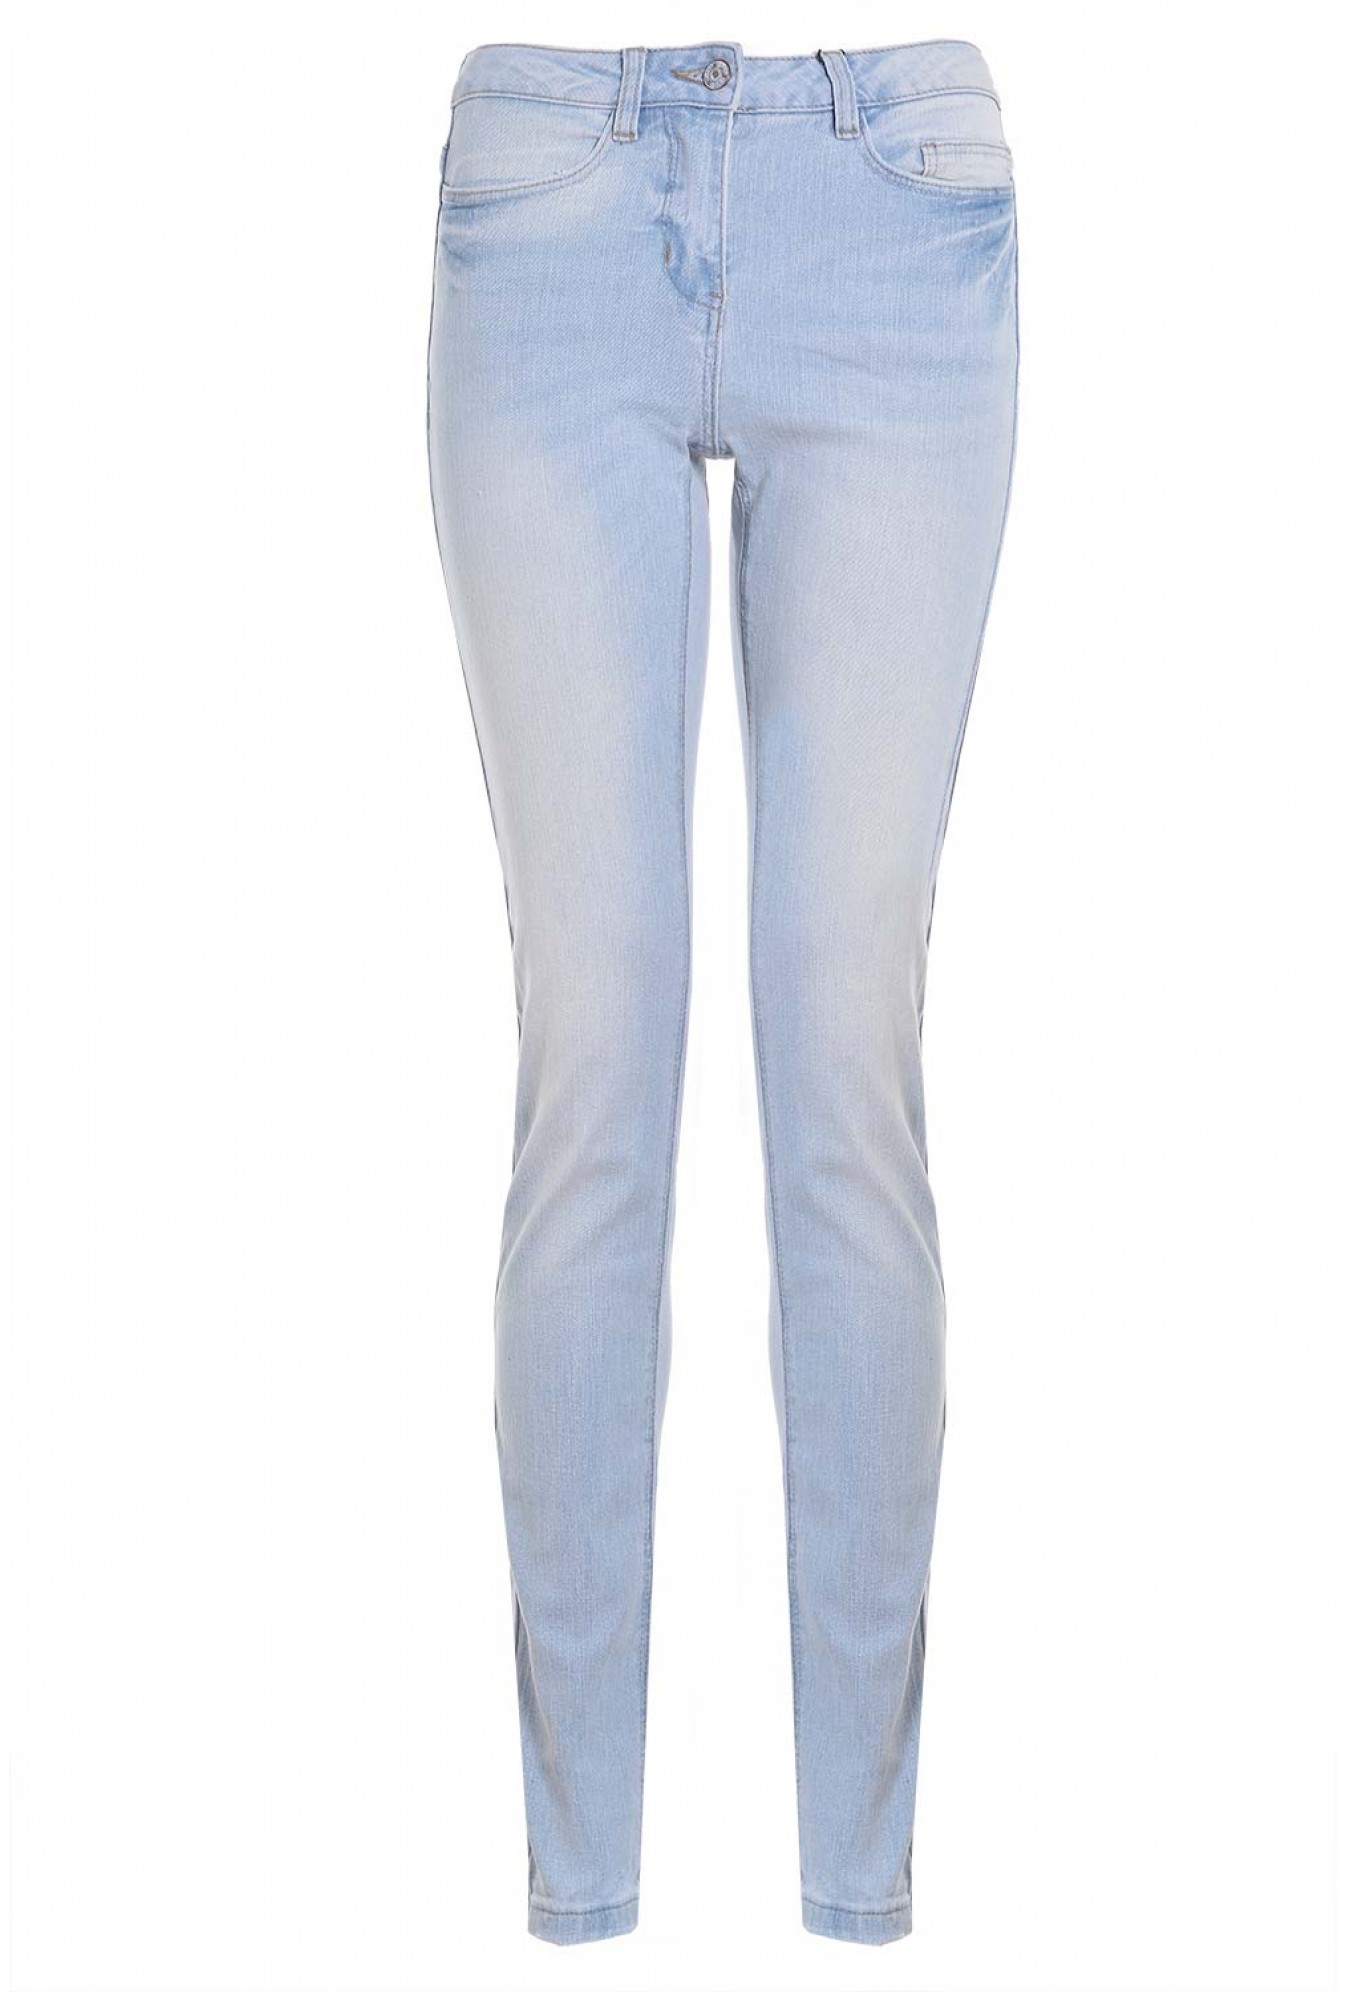 Vero Moda Lorrel Long Length Light Wash Skinny Jeans | iCLOTHING